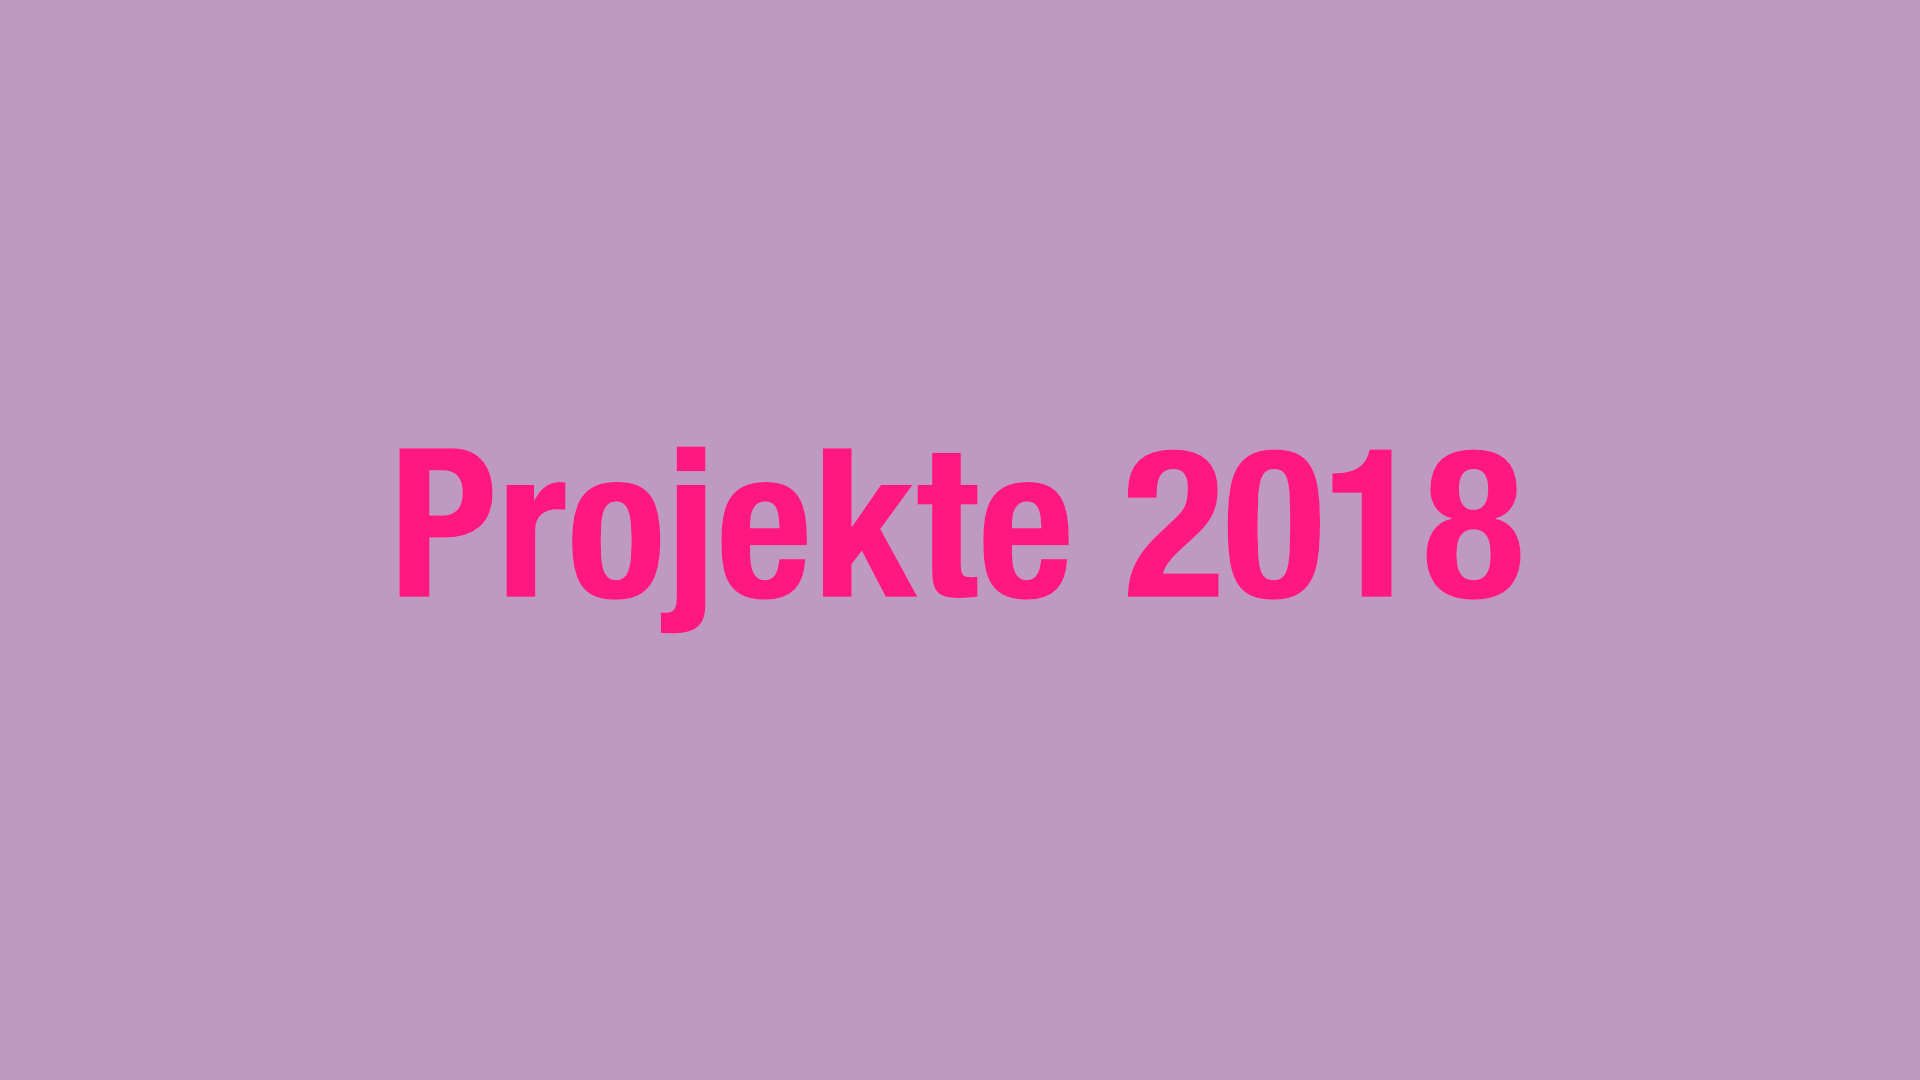 Projekte 2018